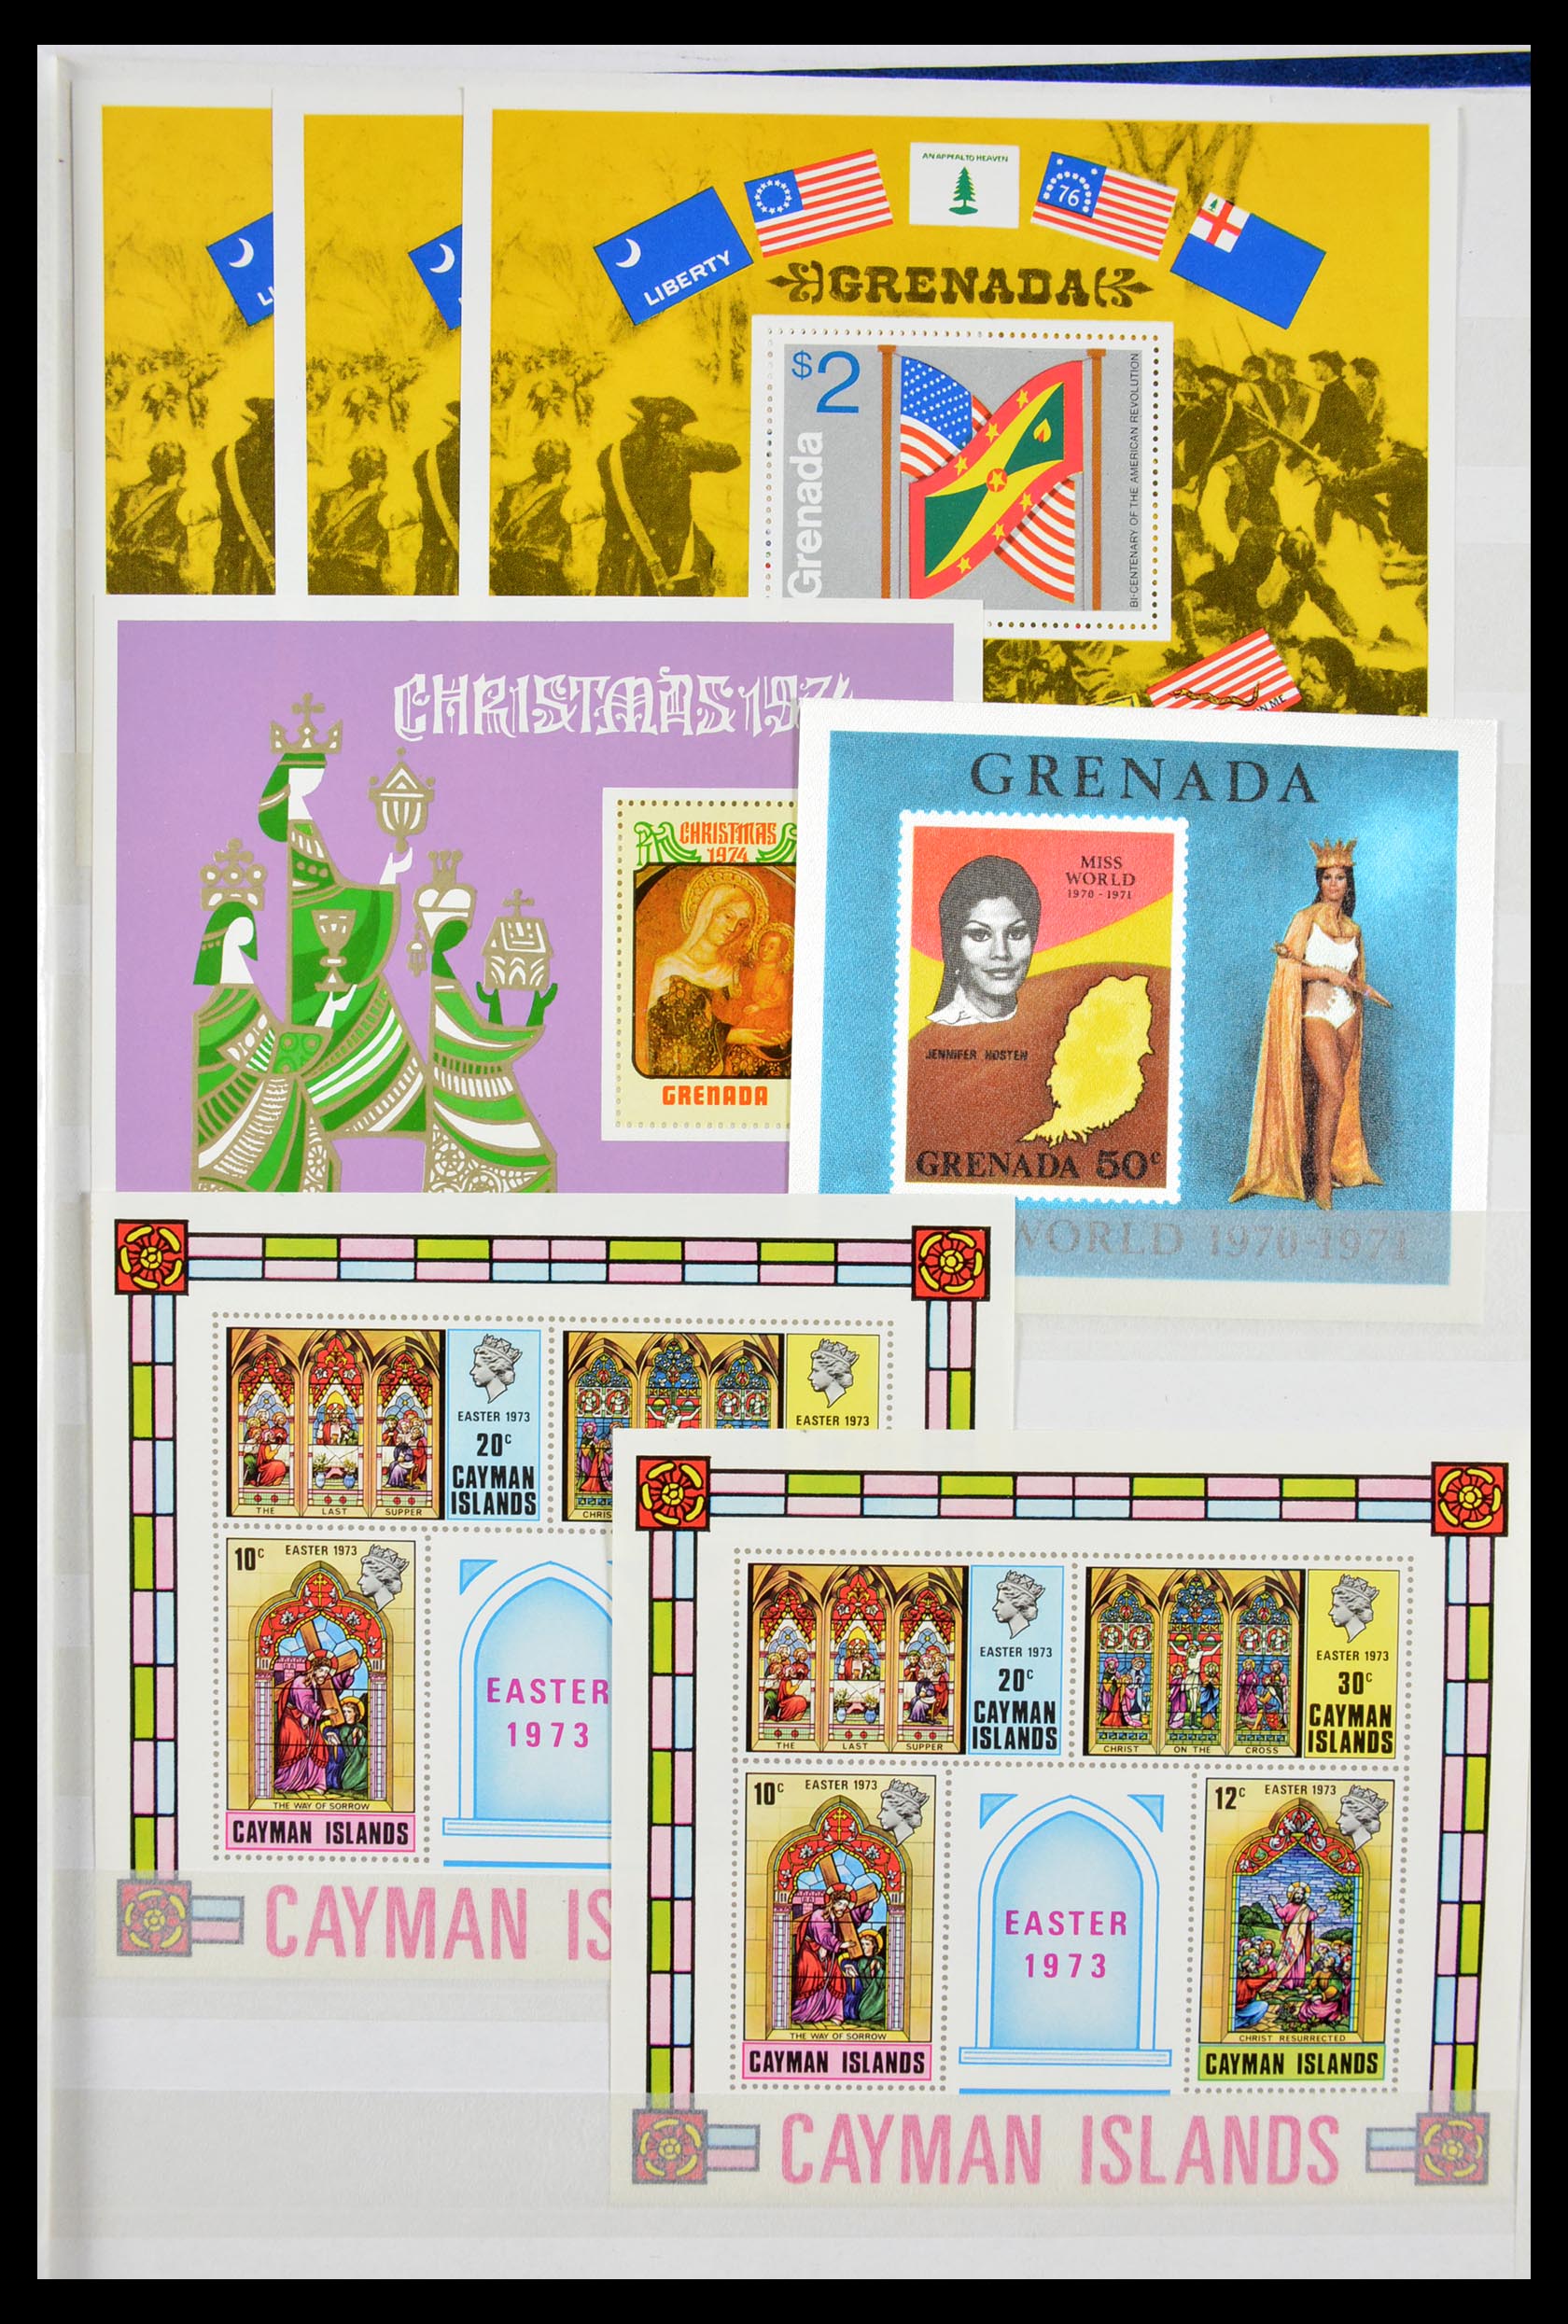 29584 100 - 29584 World souvenir sheets 1980-2011.